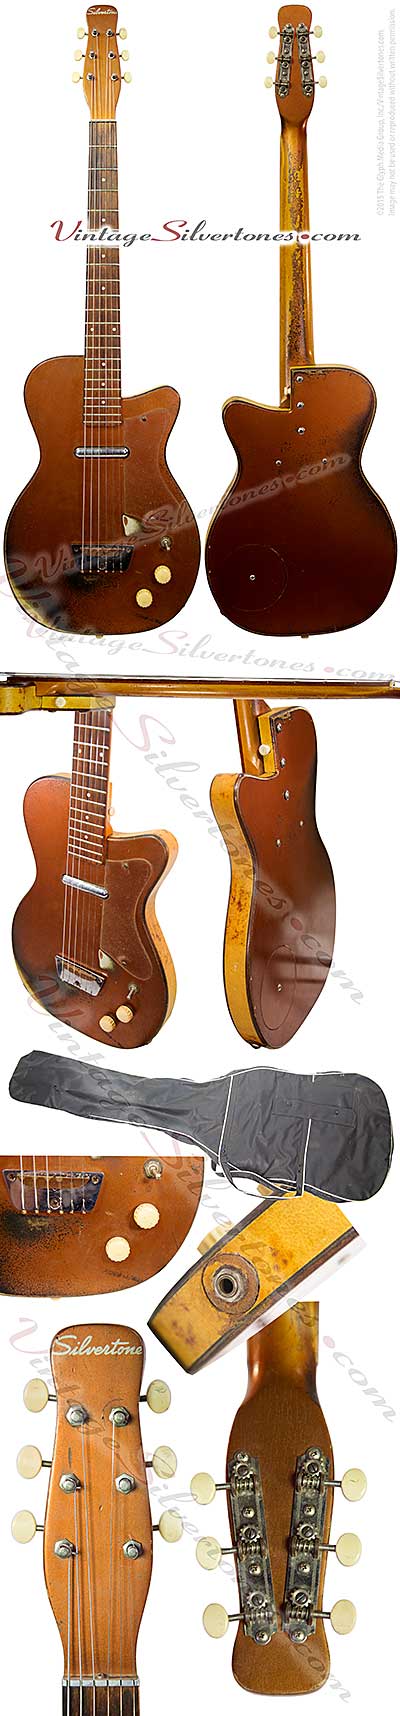 Silvertone 1321 made by Danelectro U1, one pickup, electric guitar, semi-hollow body, bronze body with white tolex binding, masonite body, lipstick pickup, made in 1956